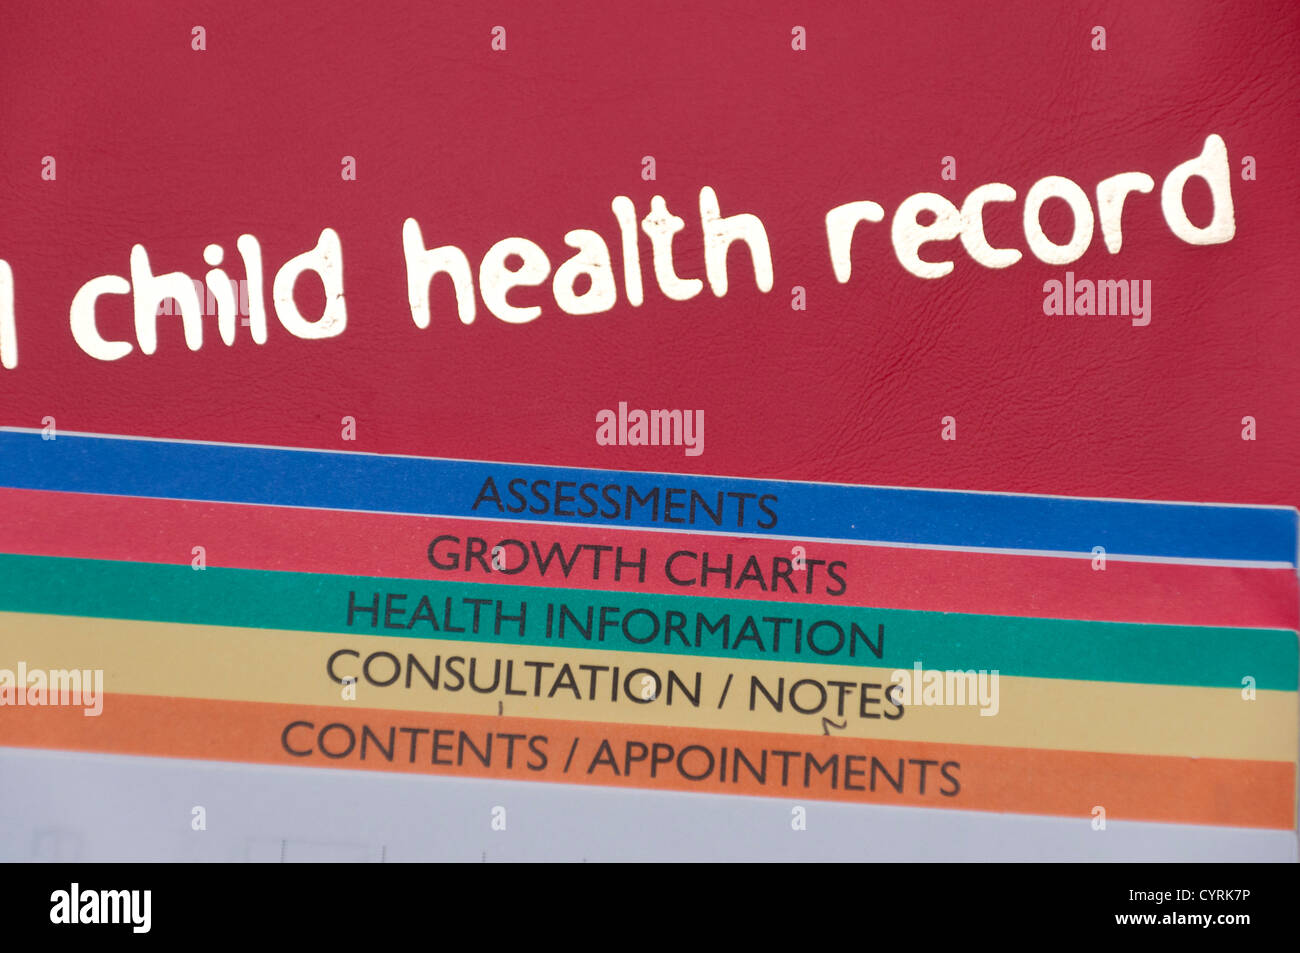 Child Health Record developmental notes. Stock Photo